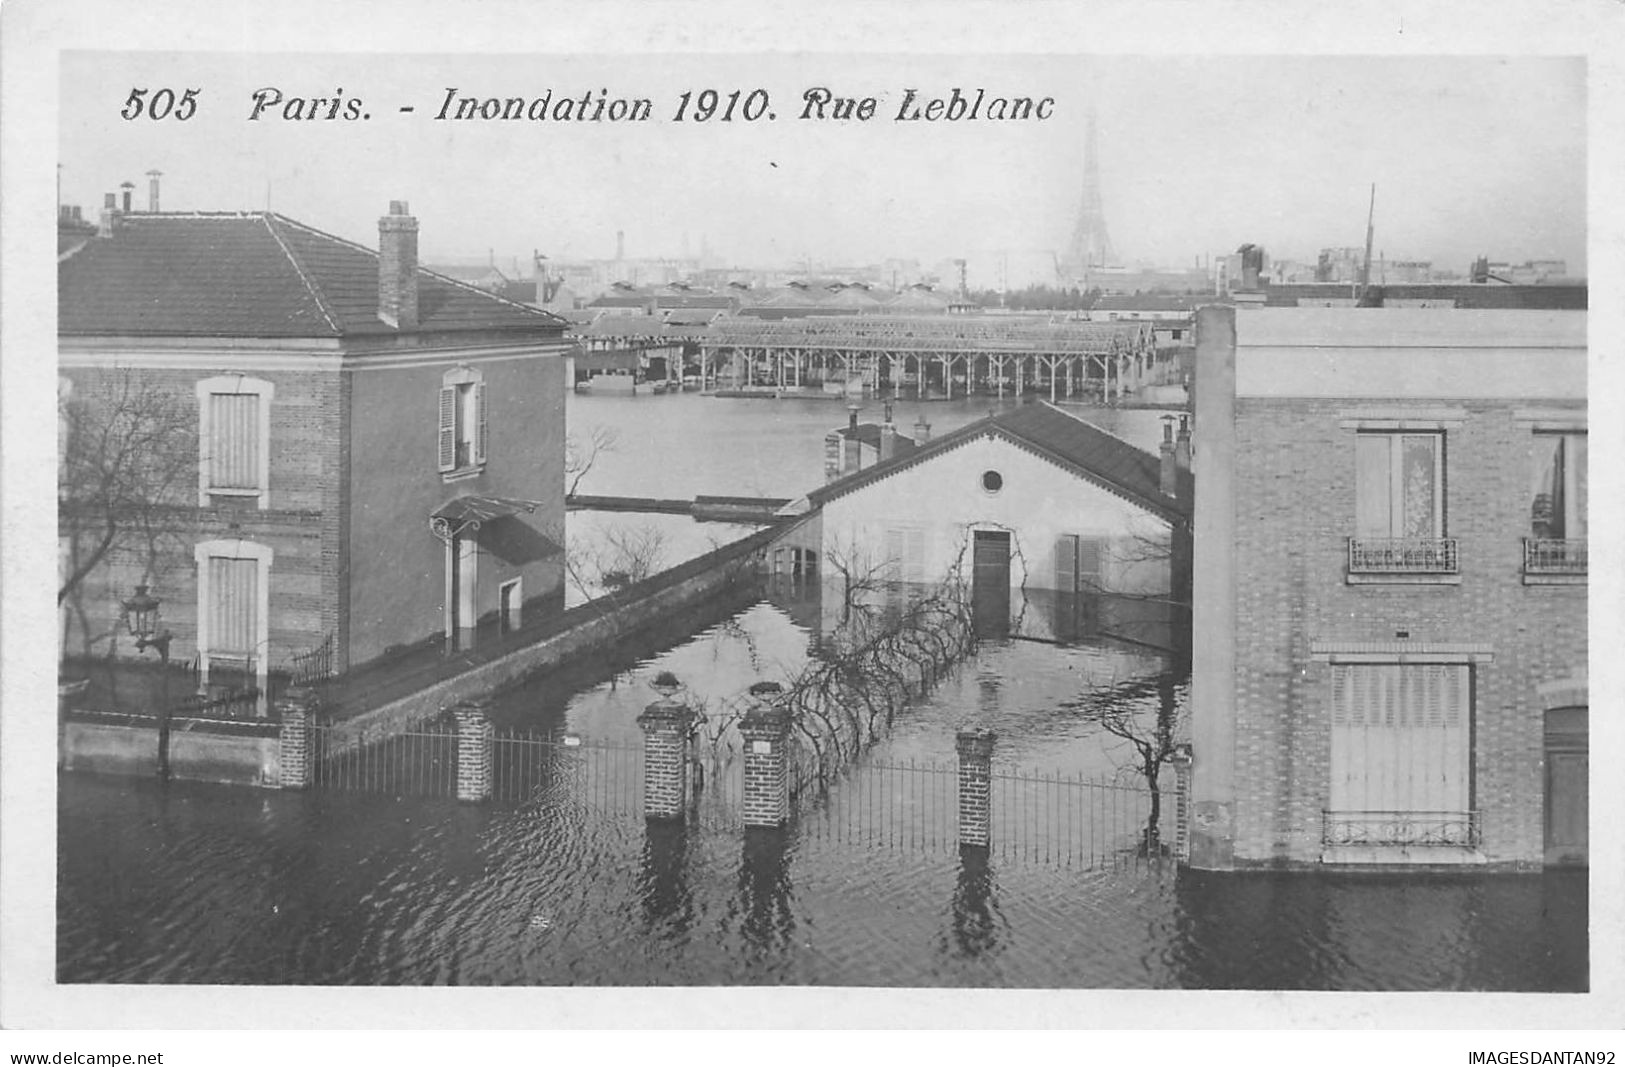 75 PARIS 15 #22738 INONDATIONS 1910 RUE LEBLANC - Paris Flood, 1910